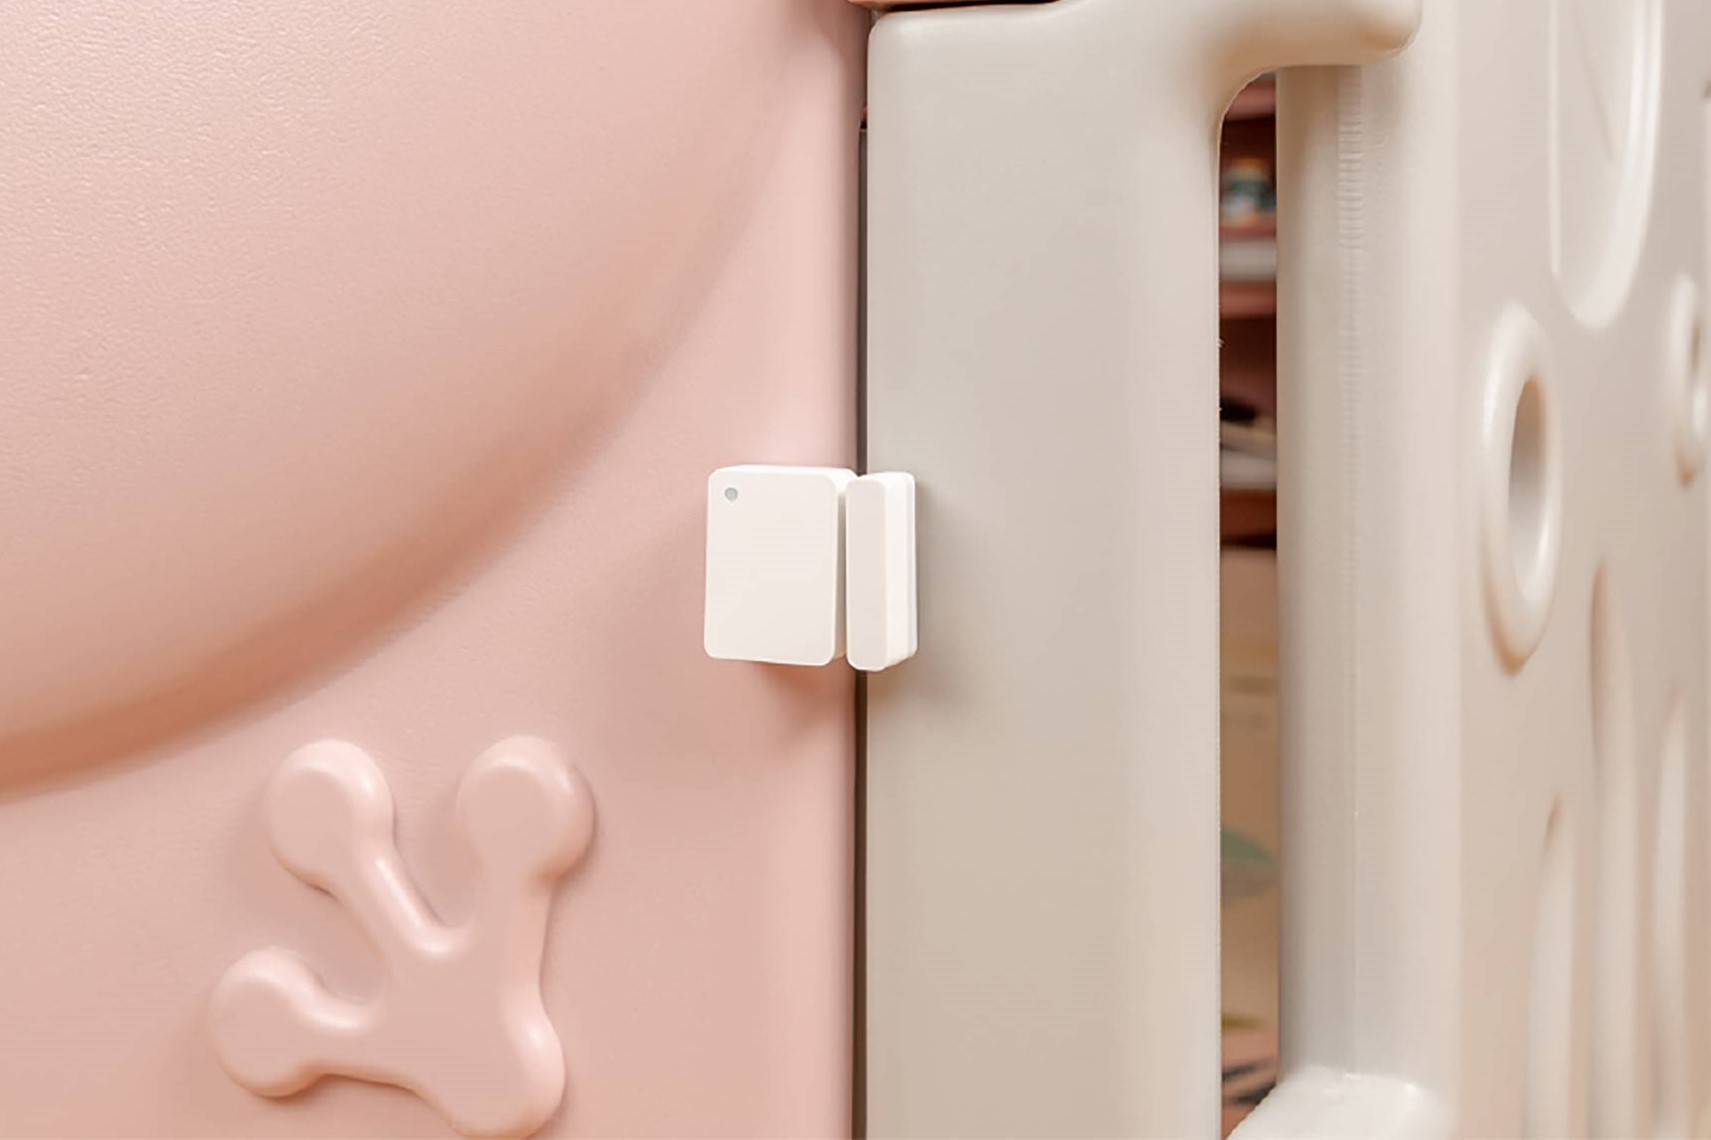 Setting Xiaomi Door Sensor To Turn On Lamp: A Quick Tutorial